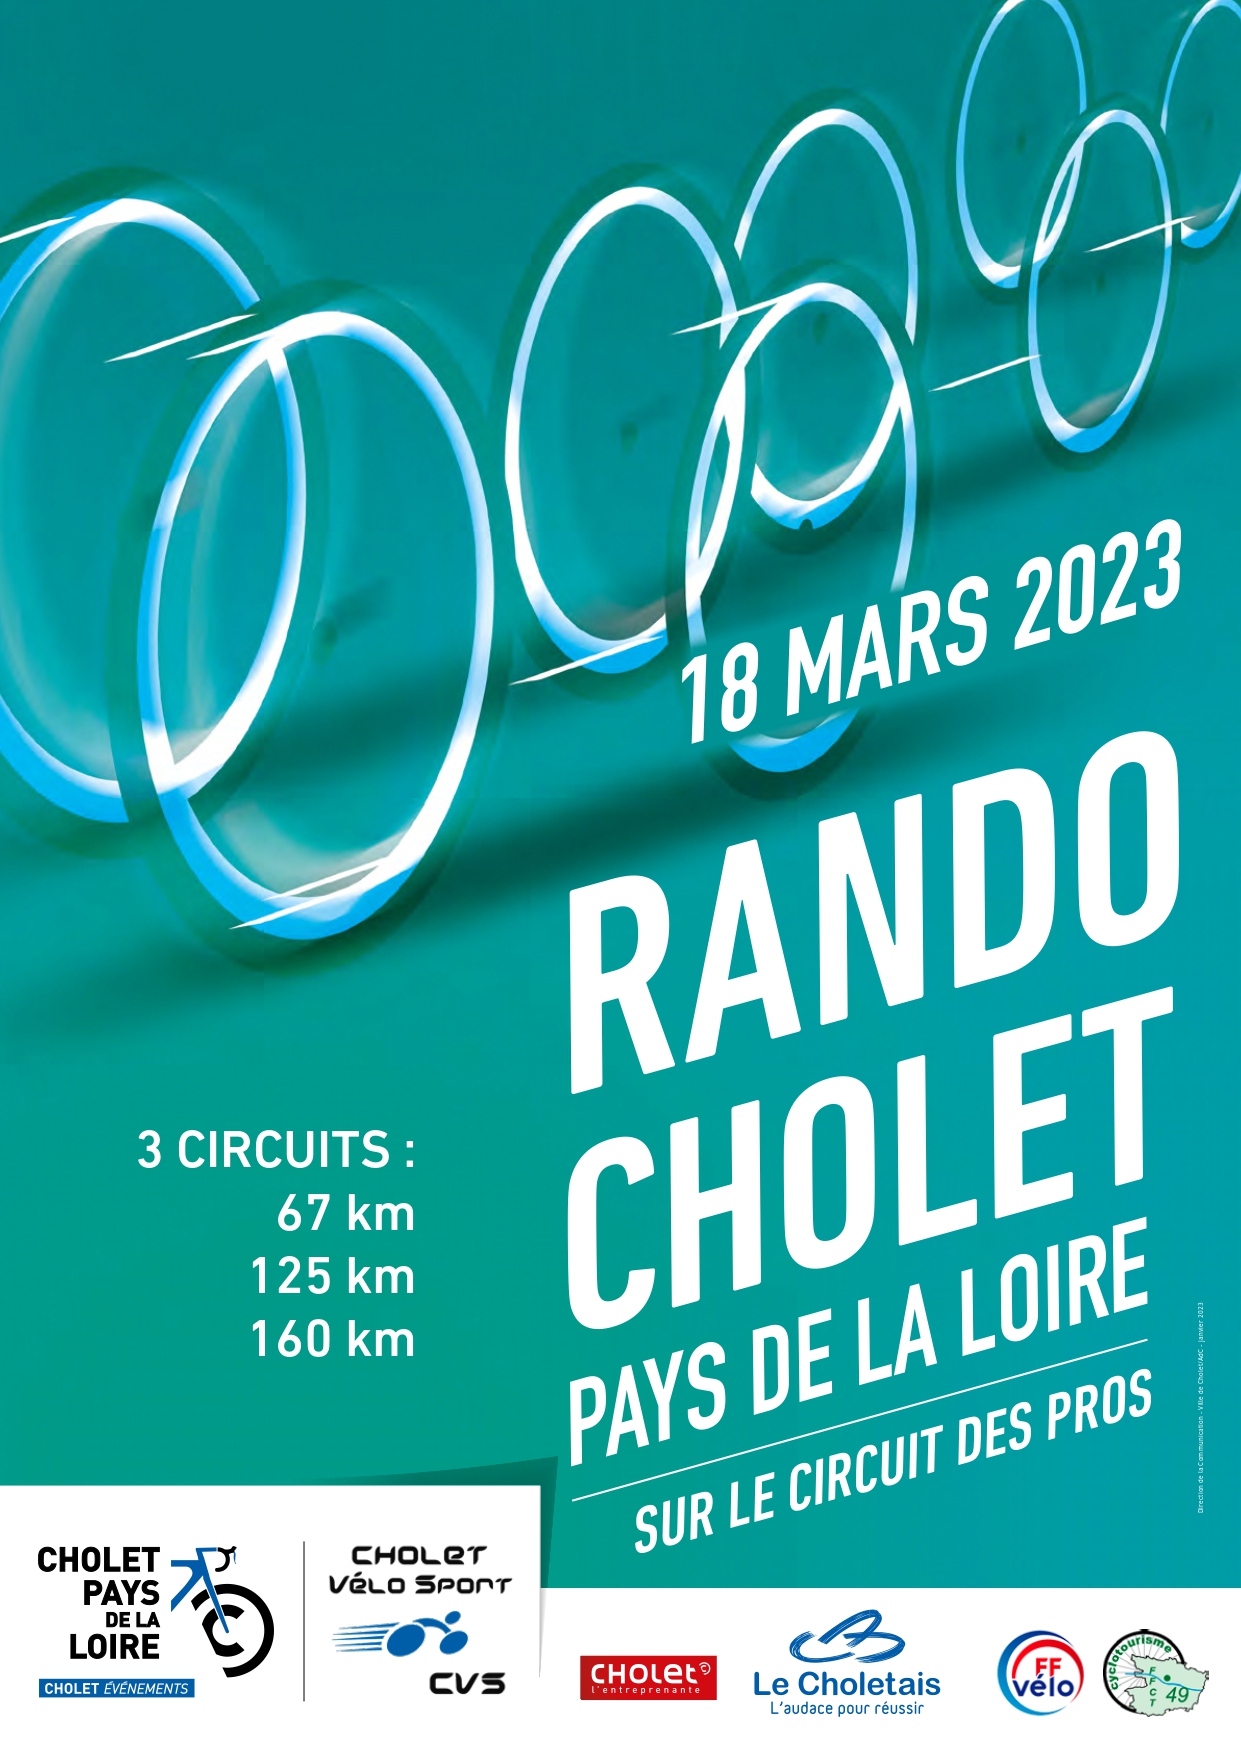 RANDO CHOLET PAYS DE LA LOIRE